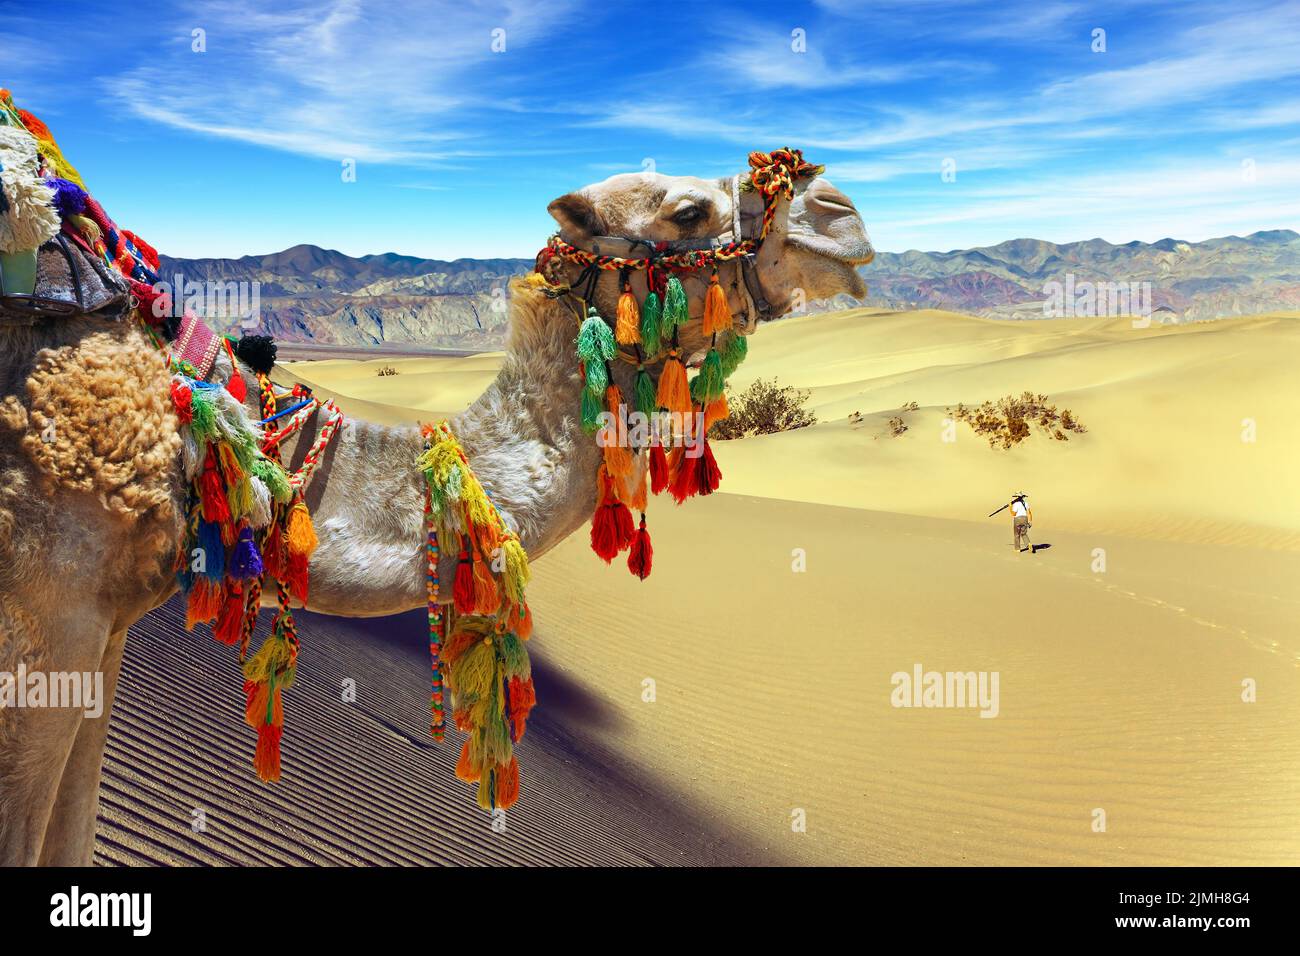 Well-groomed camel Stock Photo